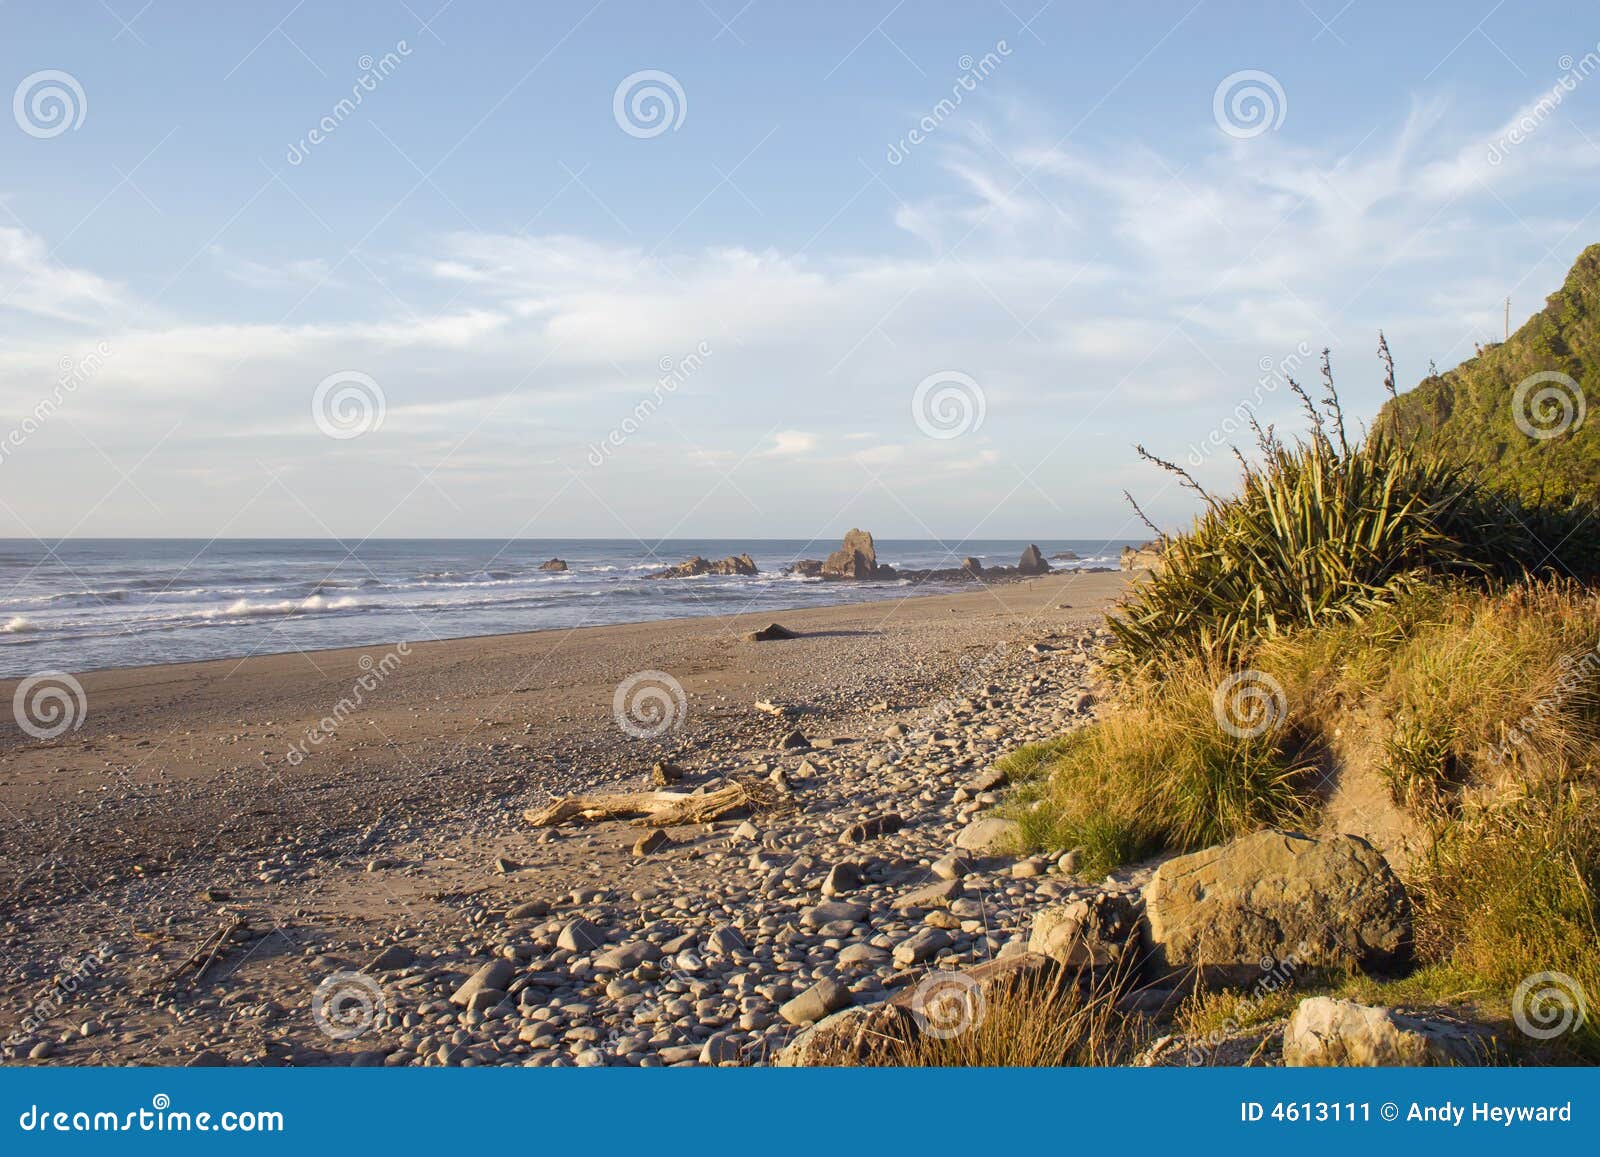 West Coast Beach 02 stock image. Image of ocean, shore - 4613111